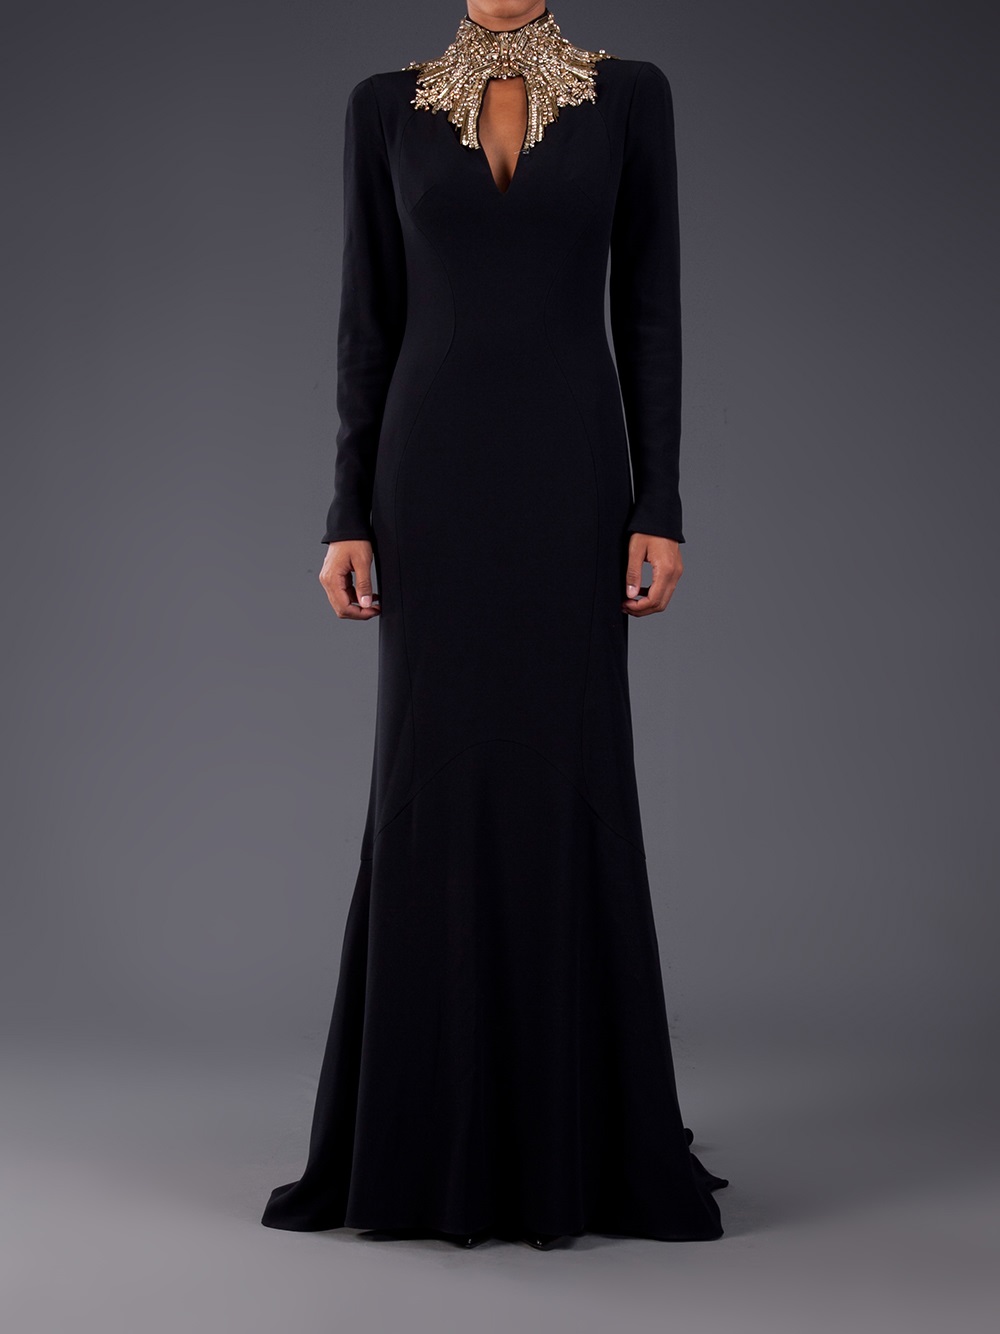 Alexander McQueen Embellished High Neck Gown in Black - Lyst